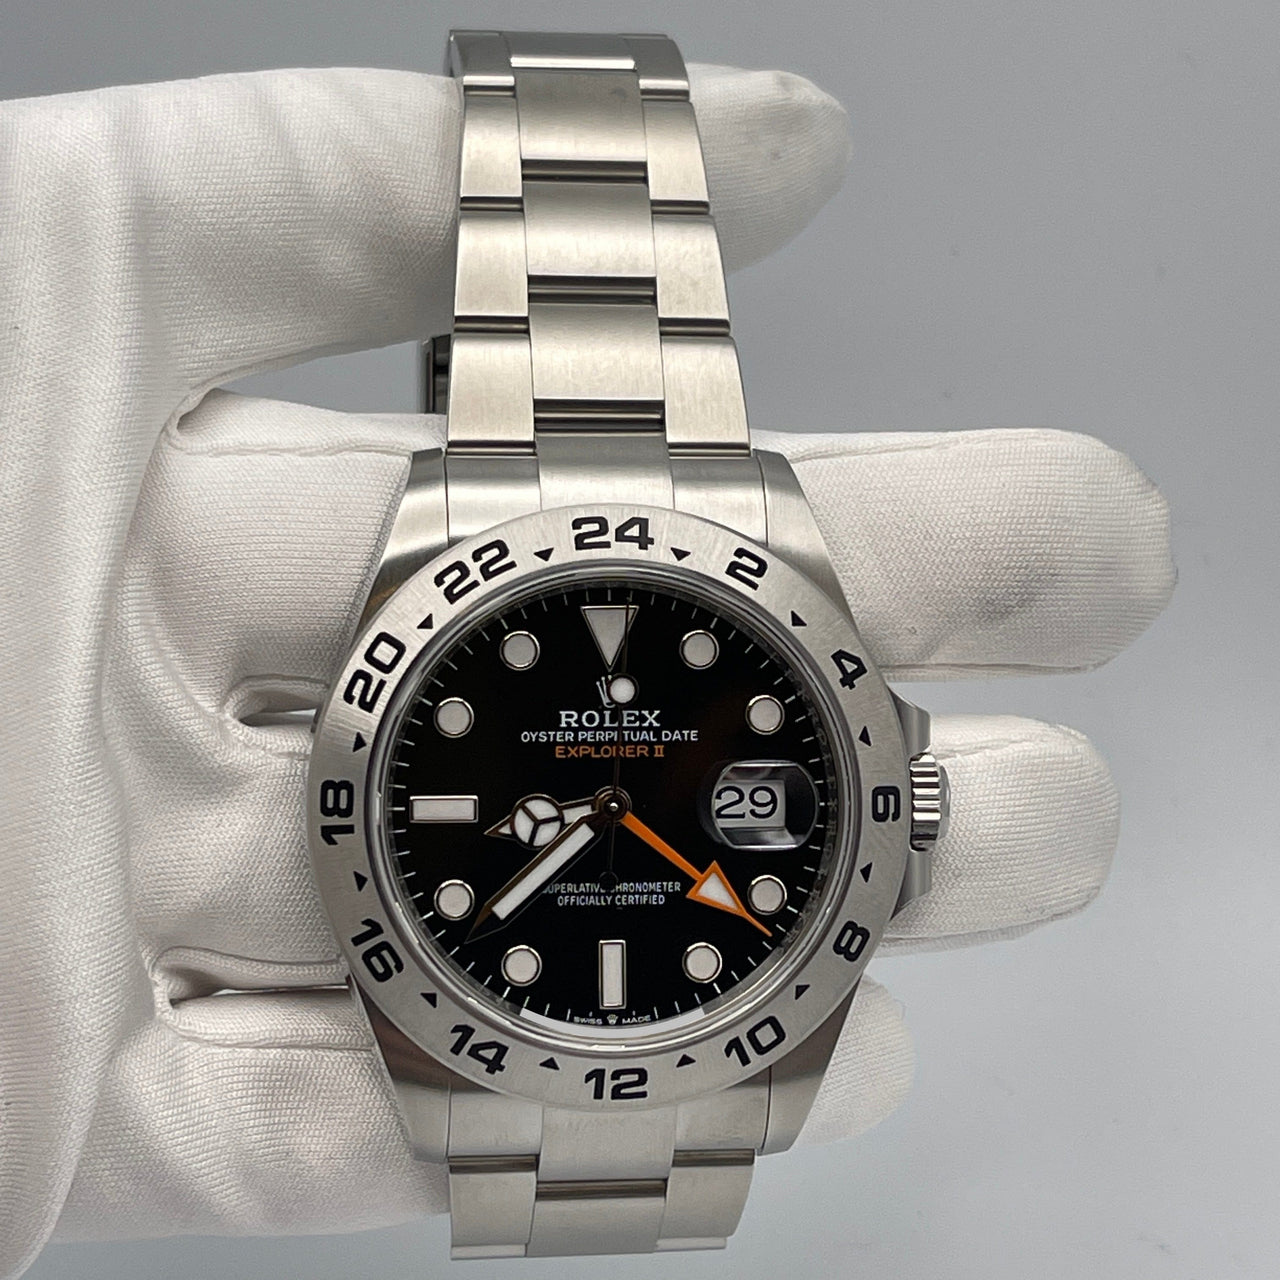 Luxury Watch Rolex Explorer II 42 Stainless Steel Black Dial 216570 Wrist Aficionado